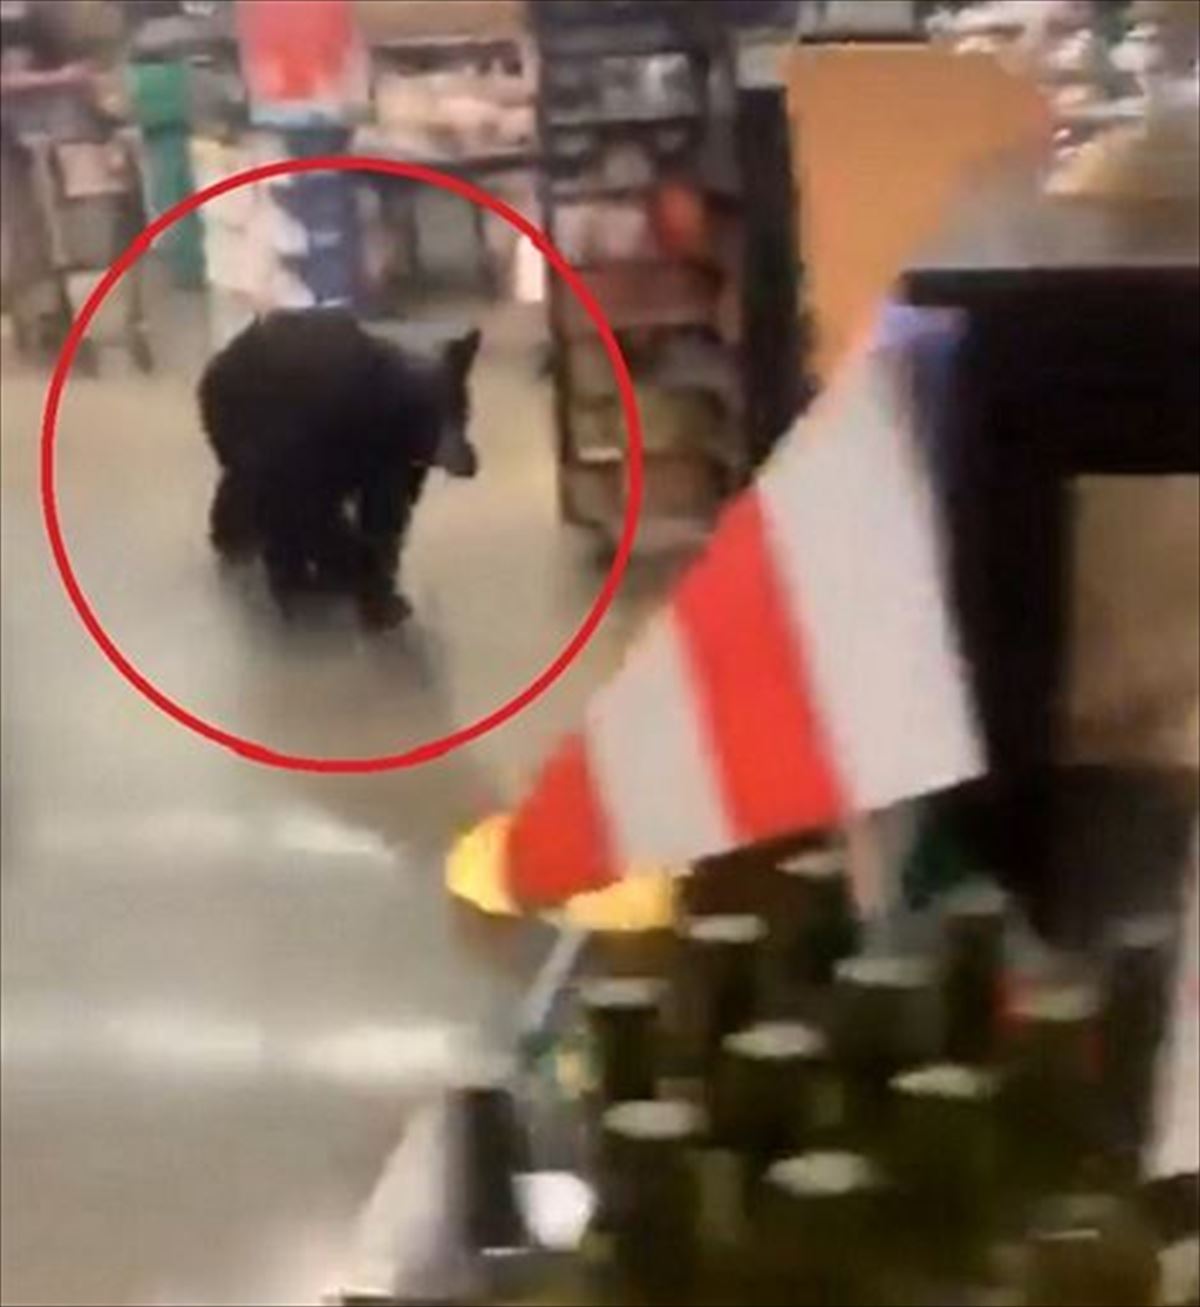 Oso en el supermercado. Imagen: Twitter